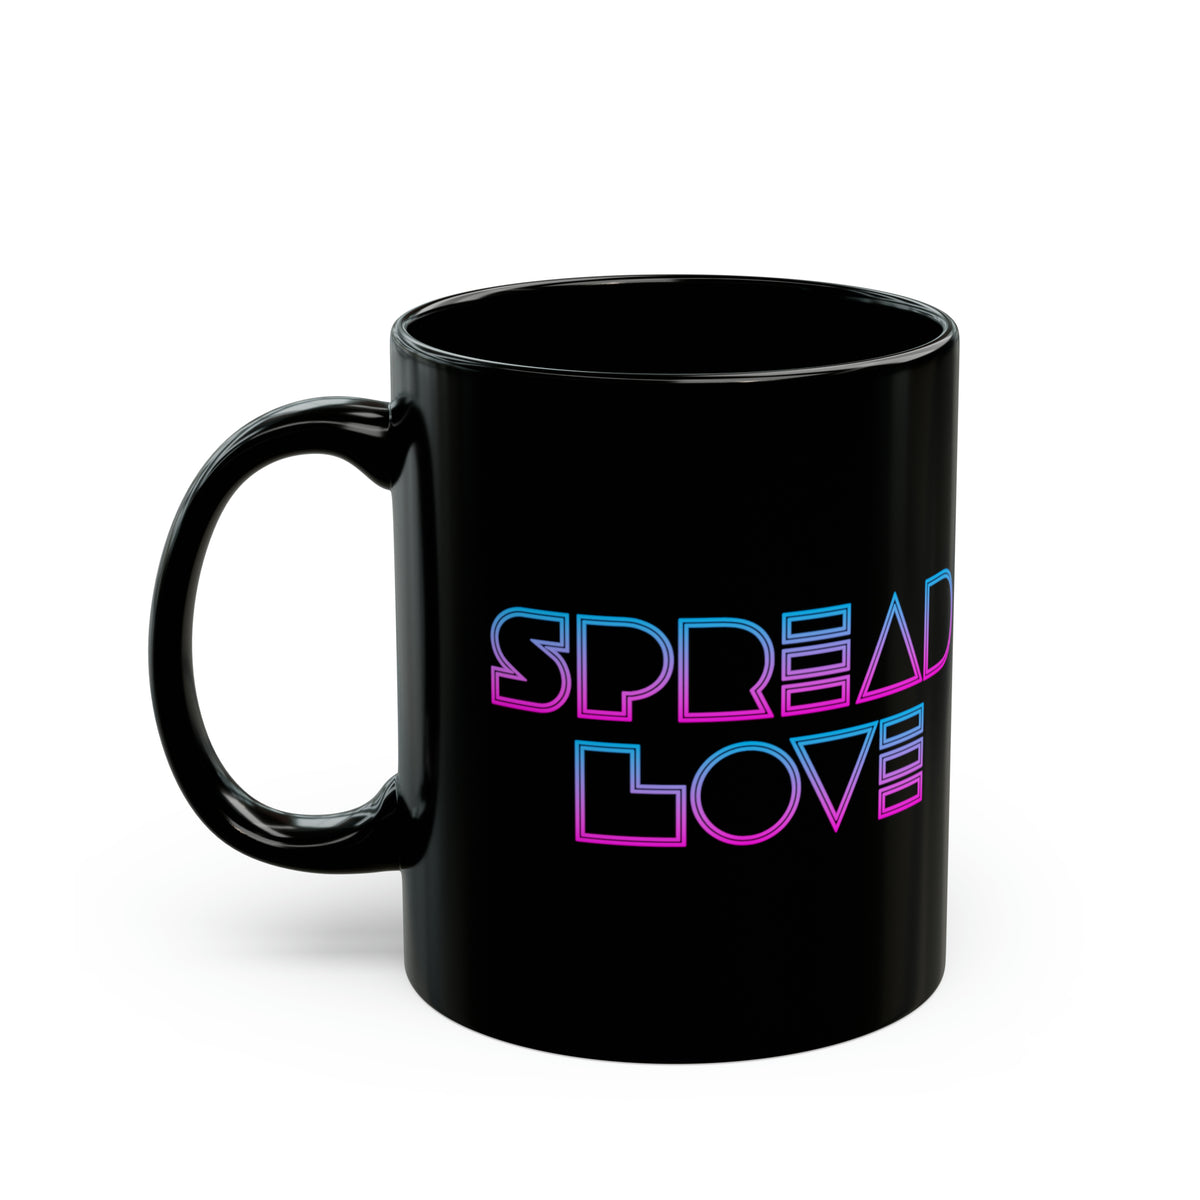 'Spread Love' Mug - Black